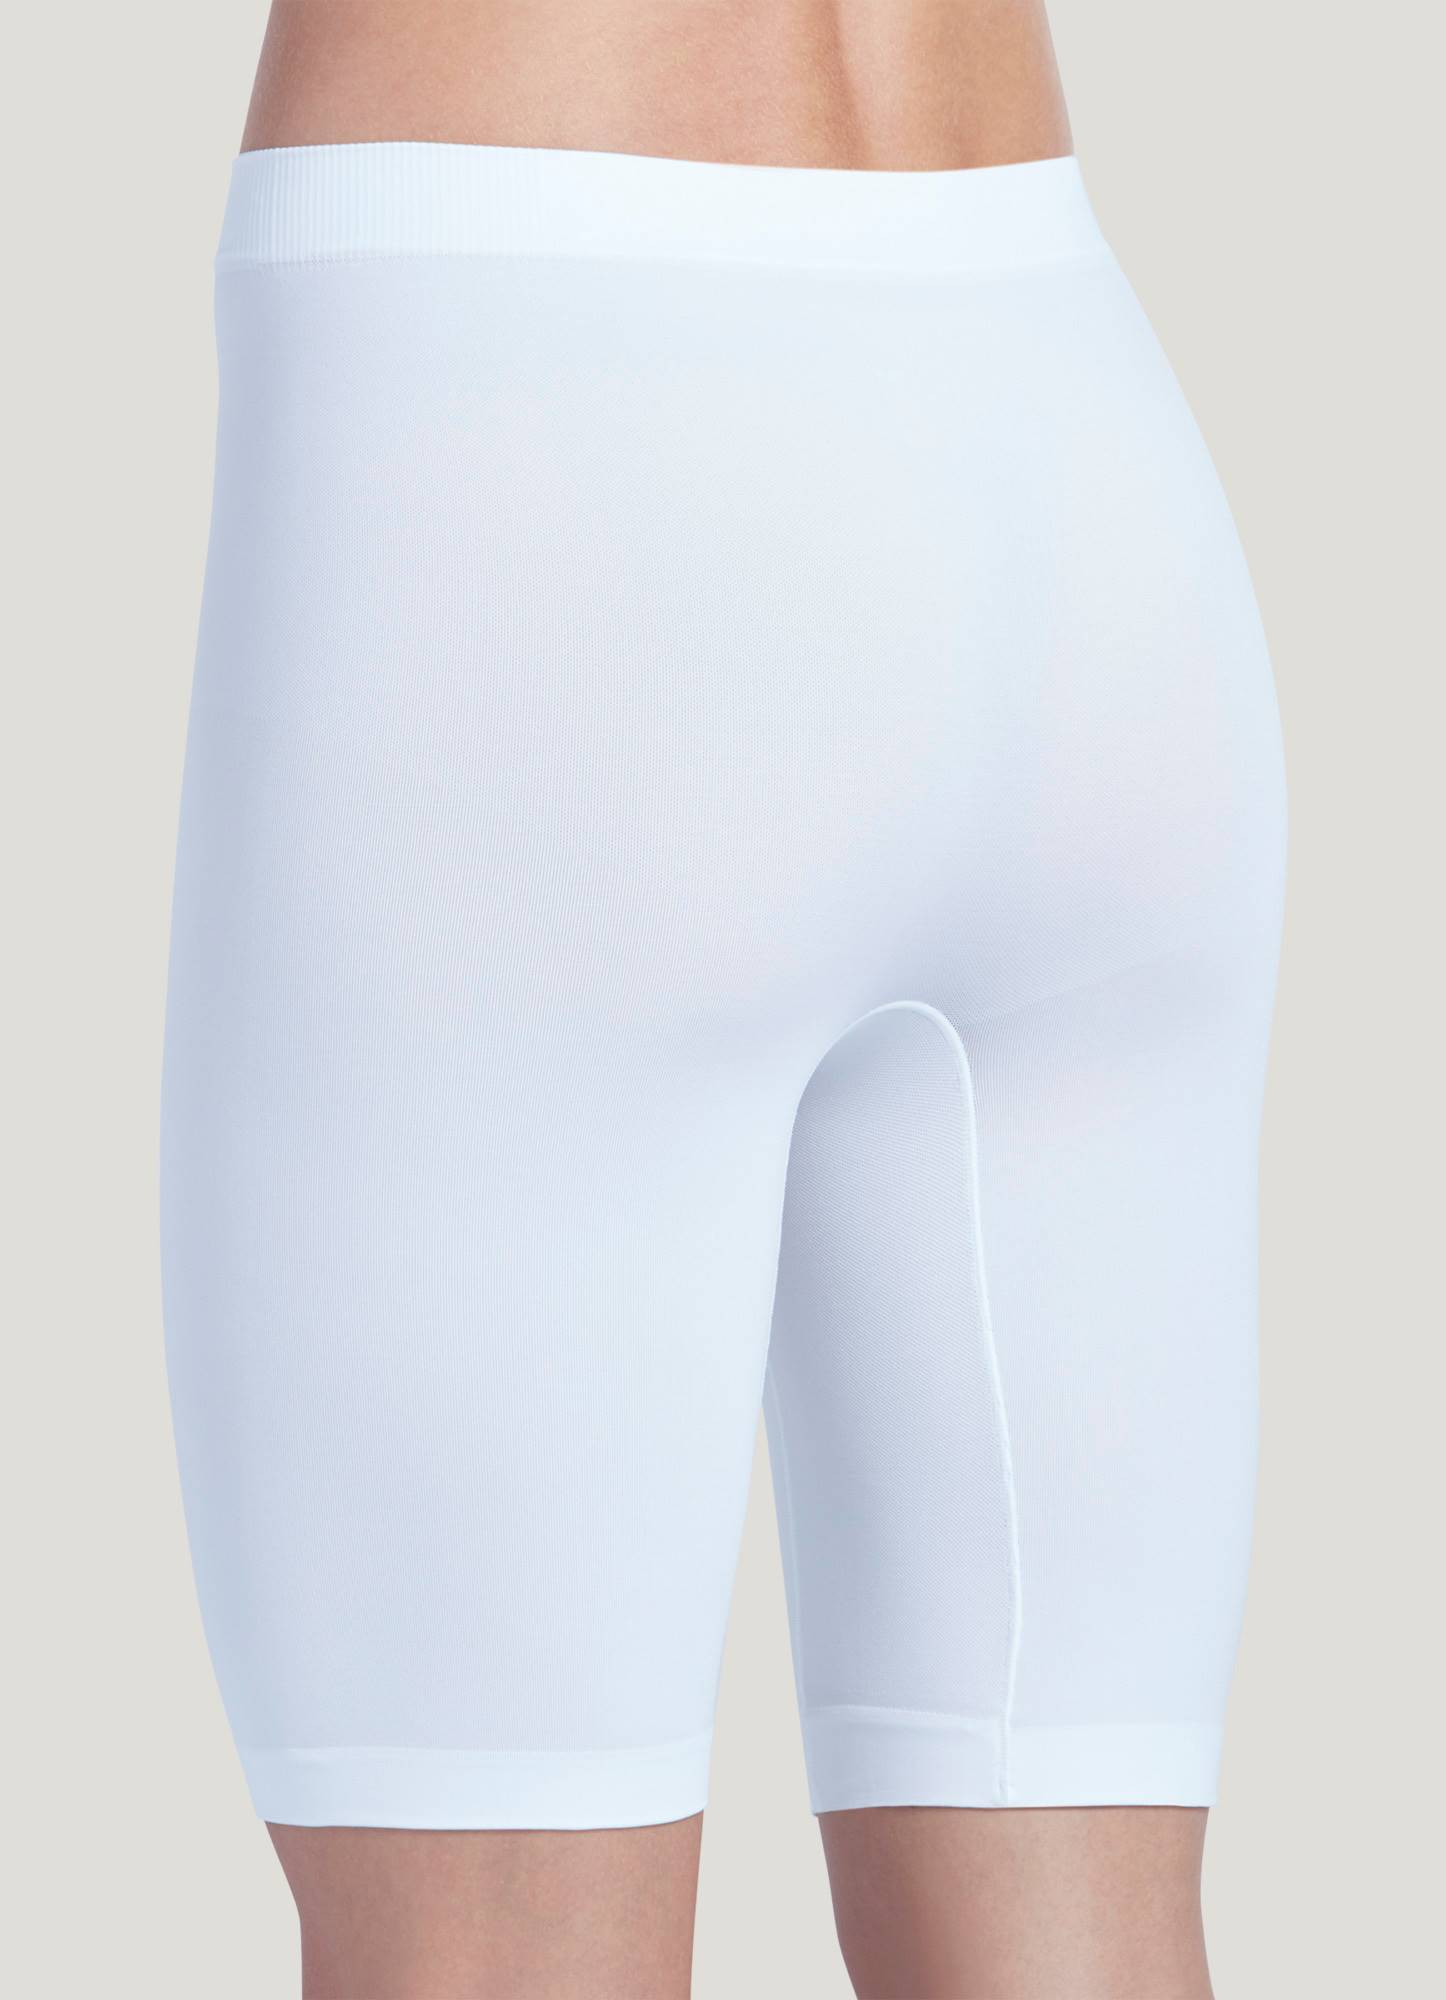 Women Seamless Control Panties Thigh Body Shaper Skimmies Slip